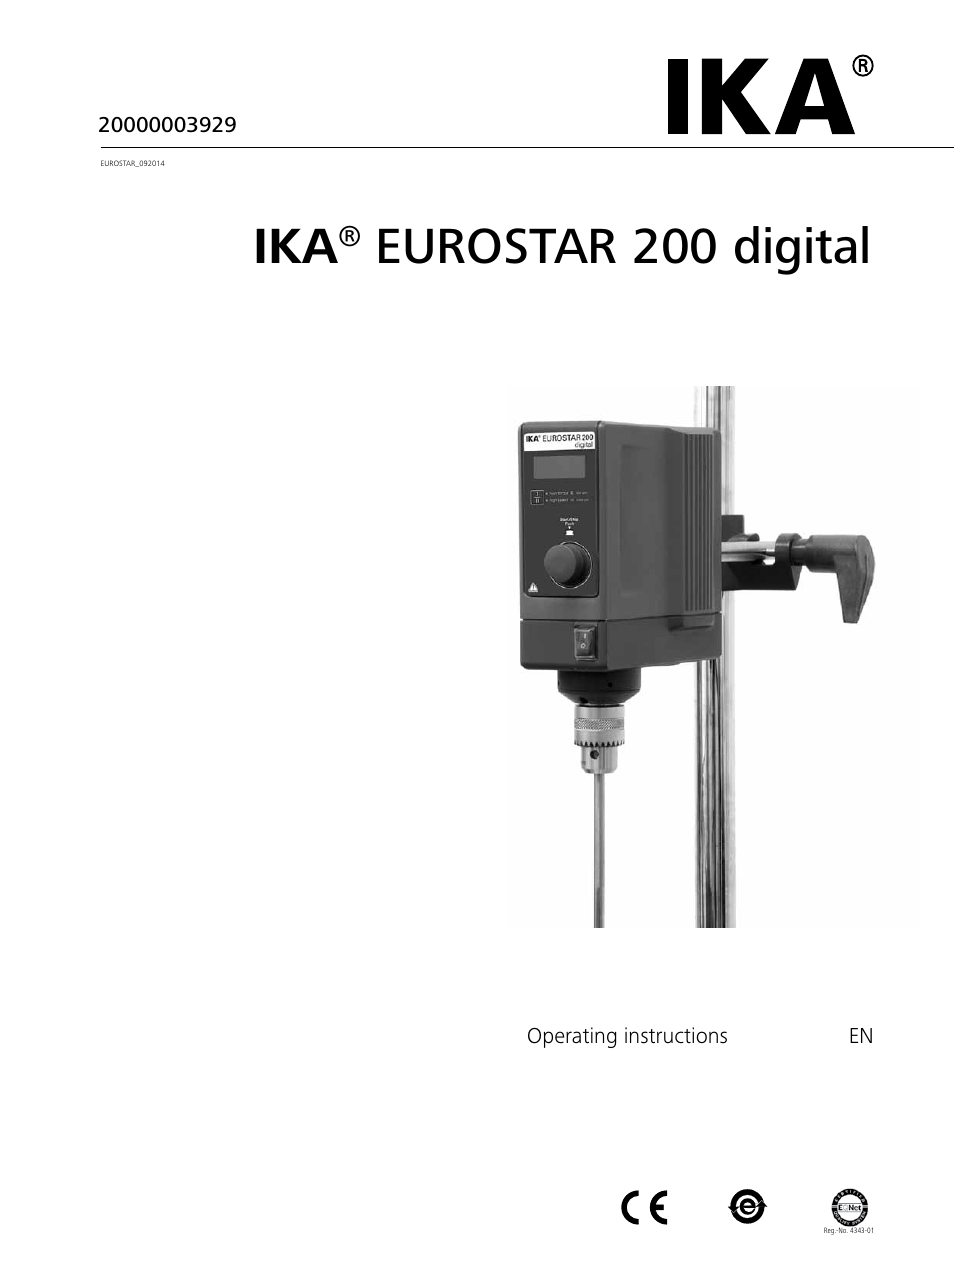 IKA EUROSTAR 200 digital User Manual | 12 pages